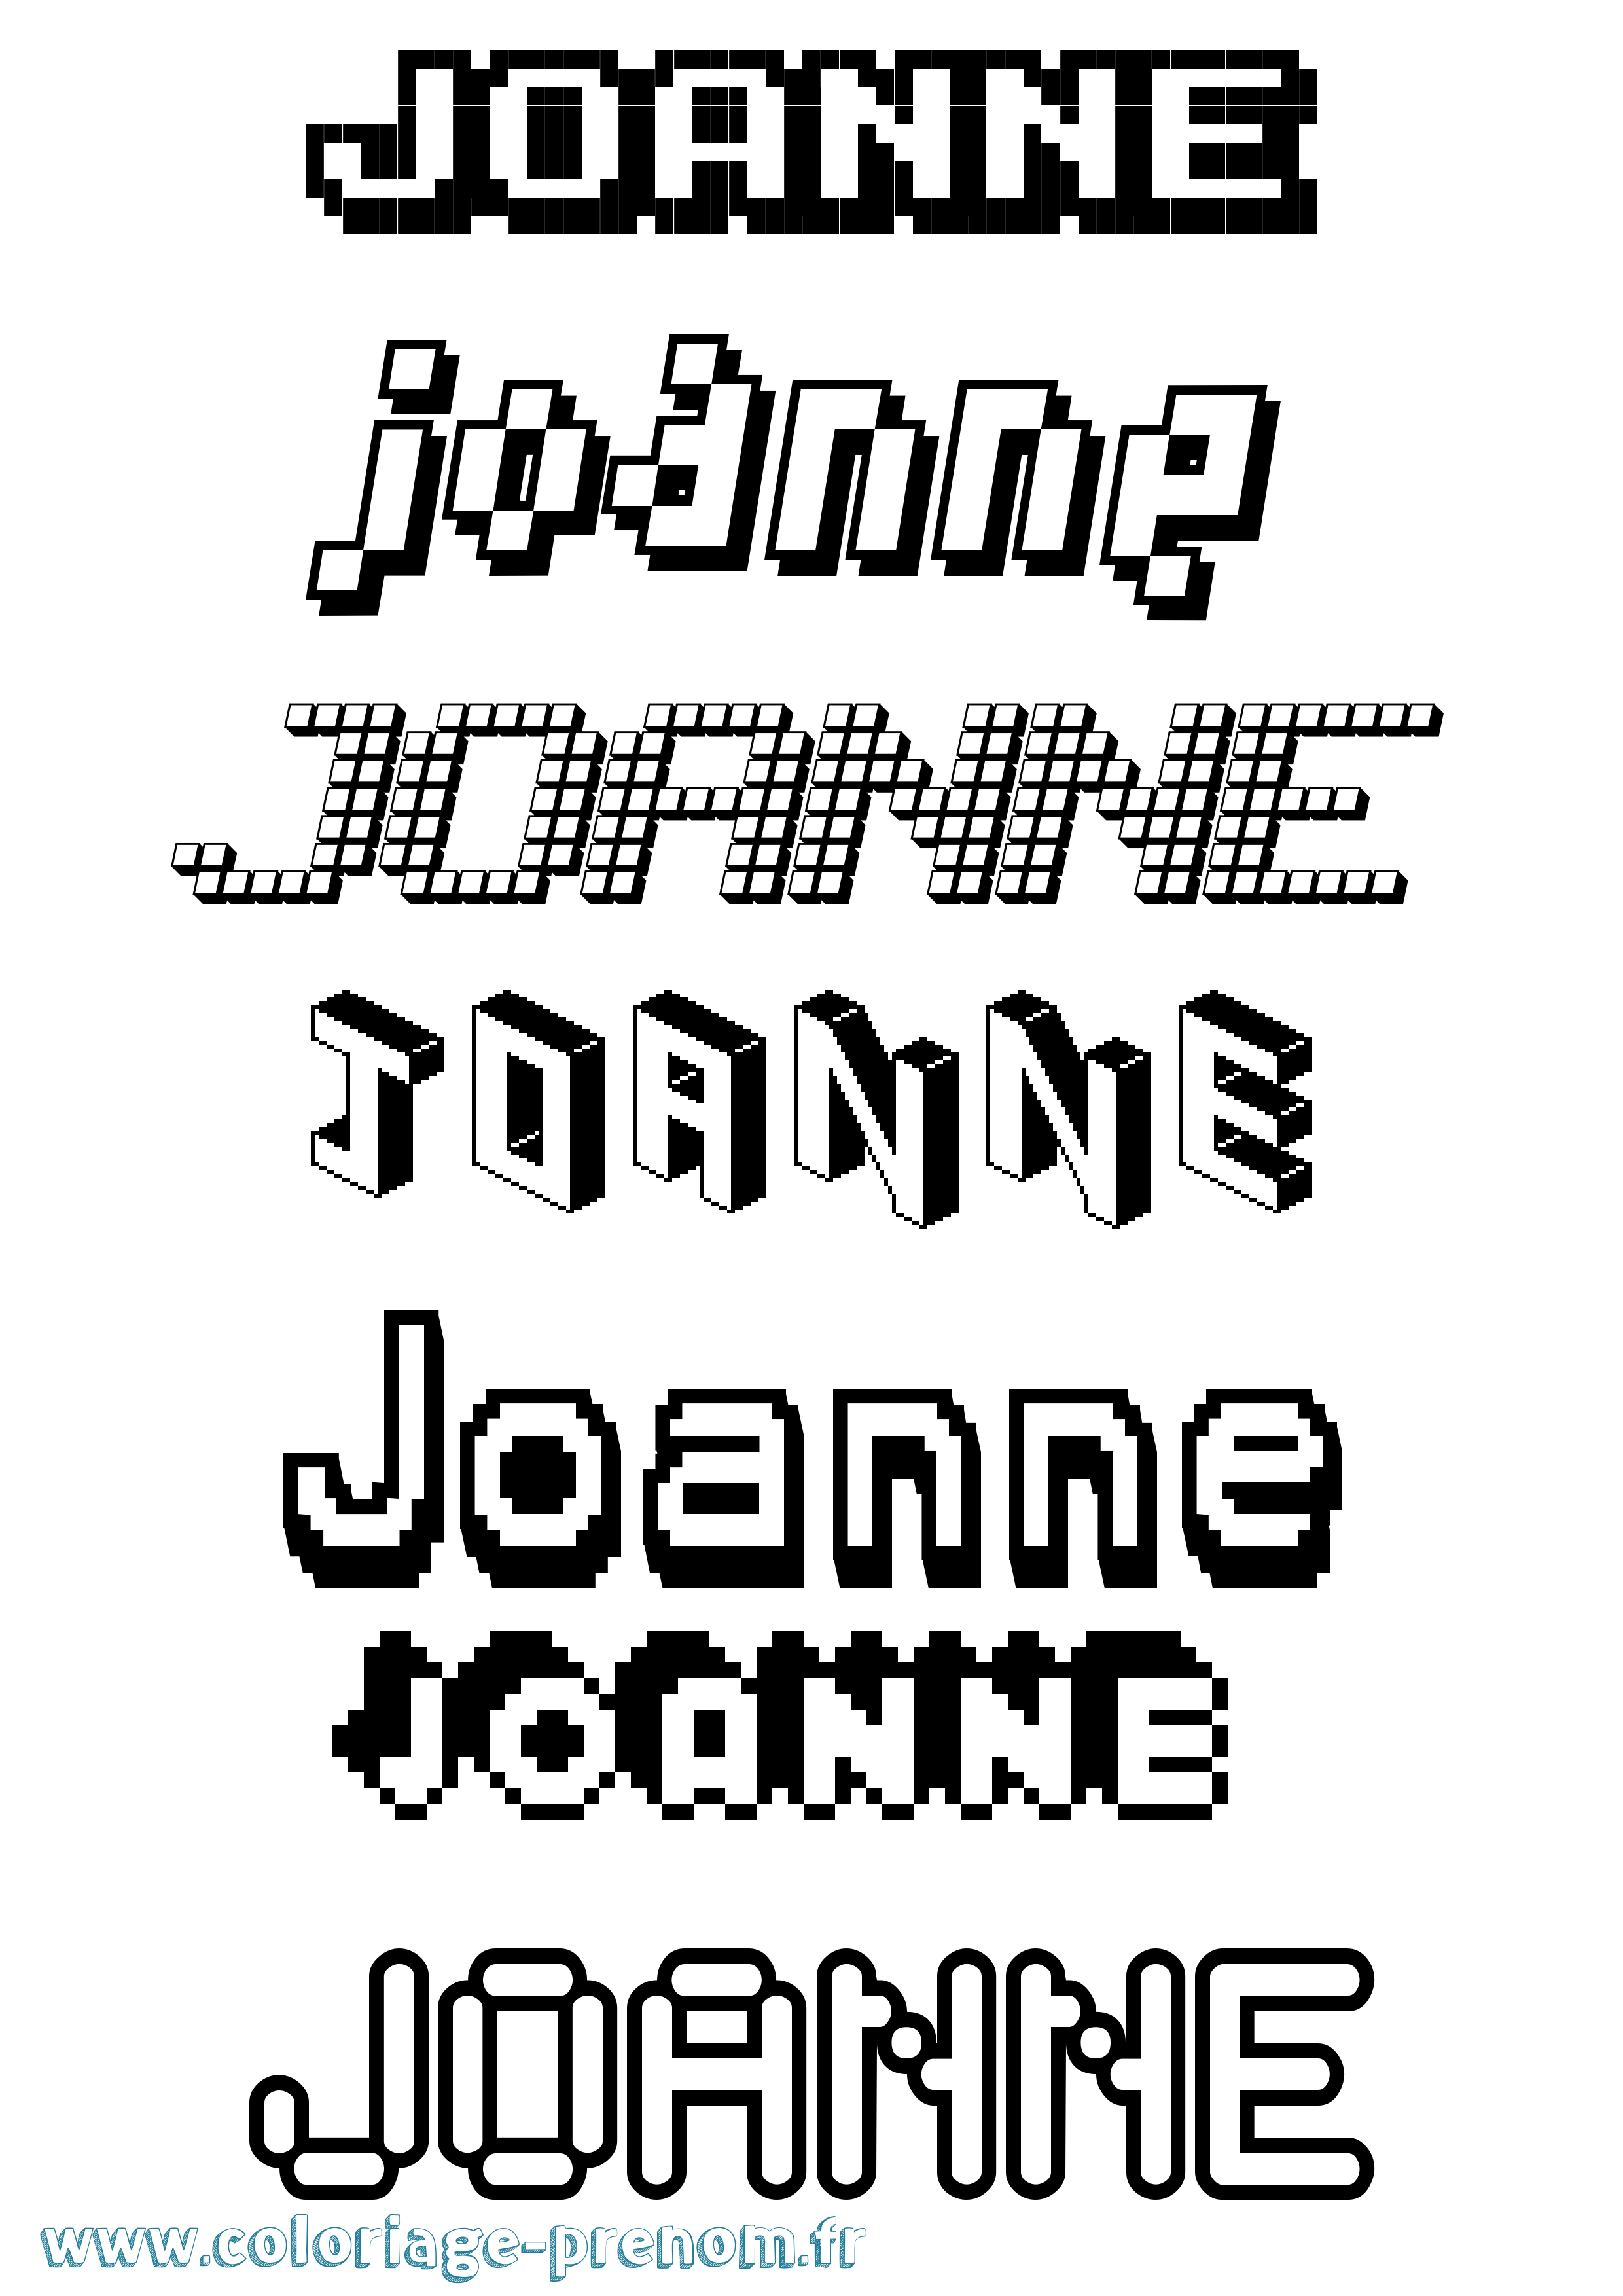 Coloriage prénom Joanne Pixel